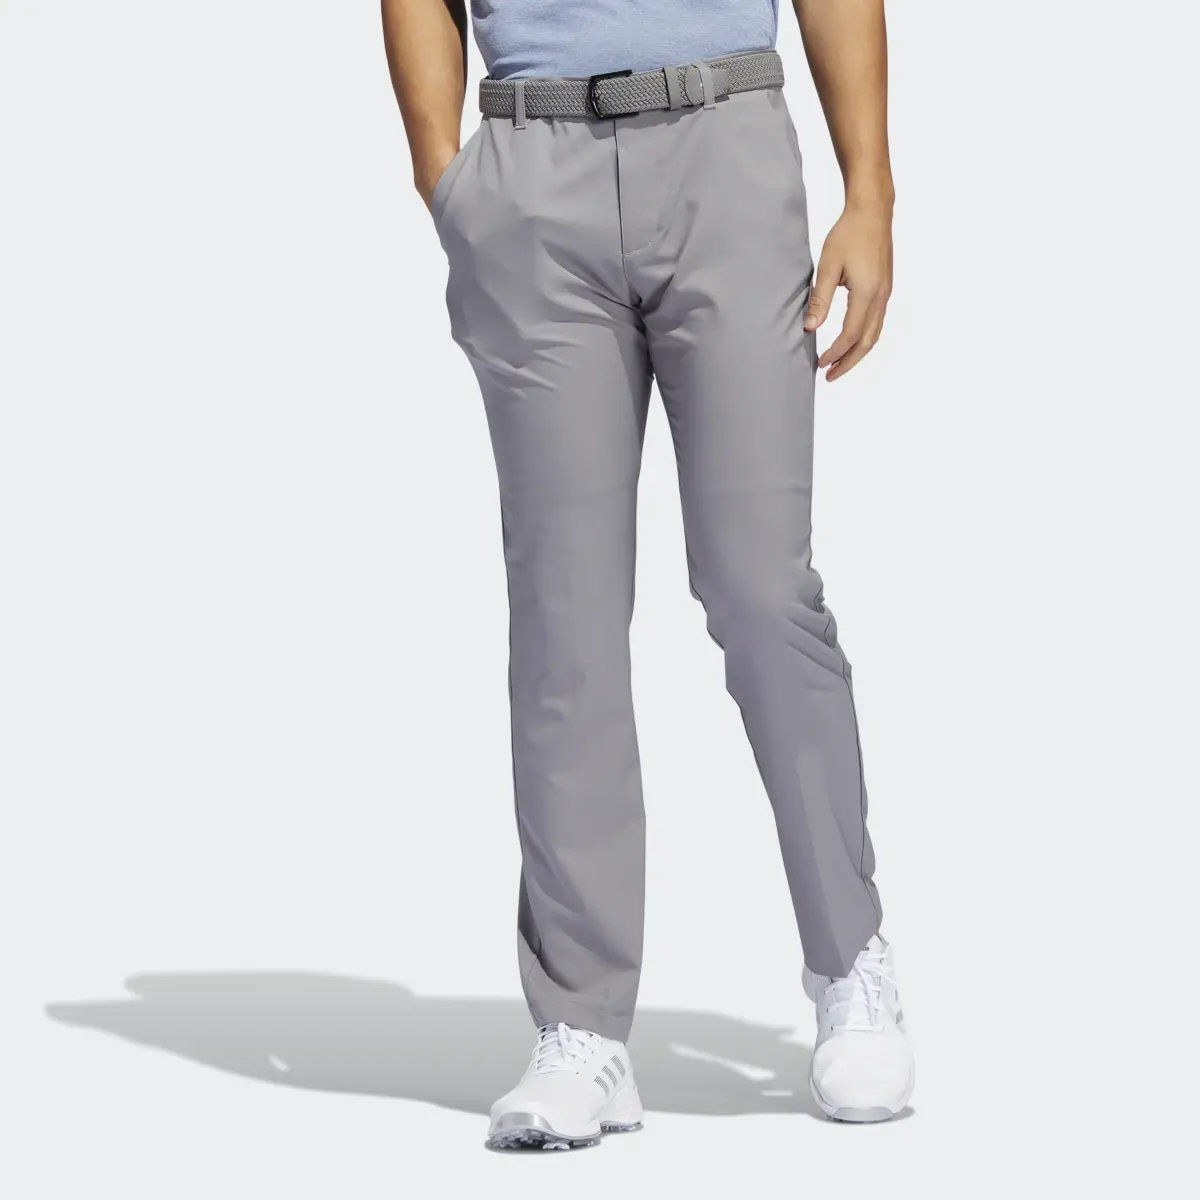 Adidas Ultimate365 Pants. 1